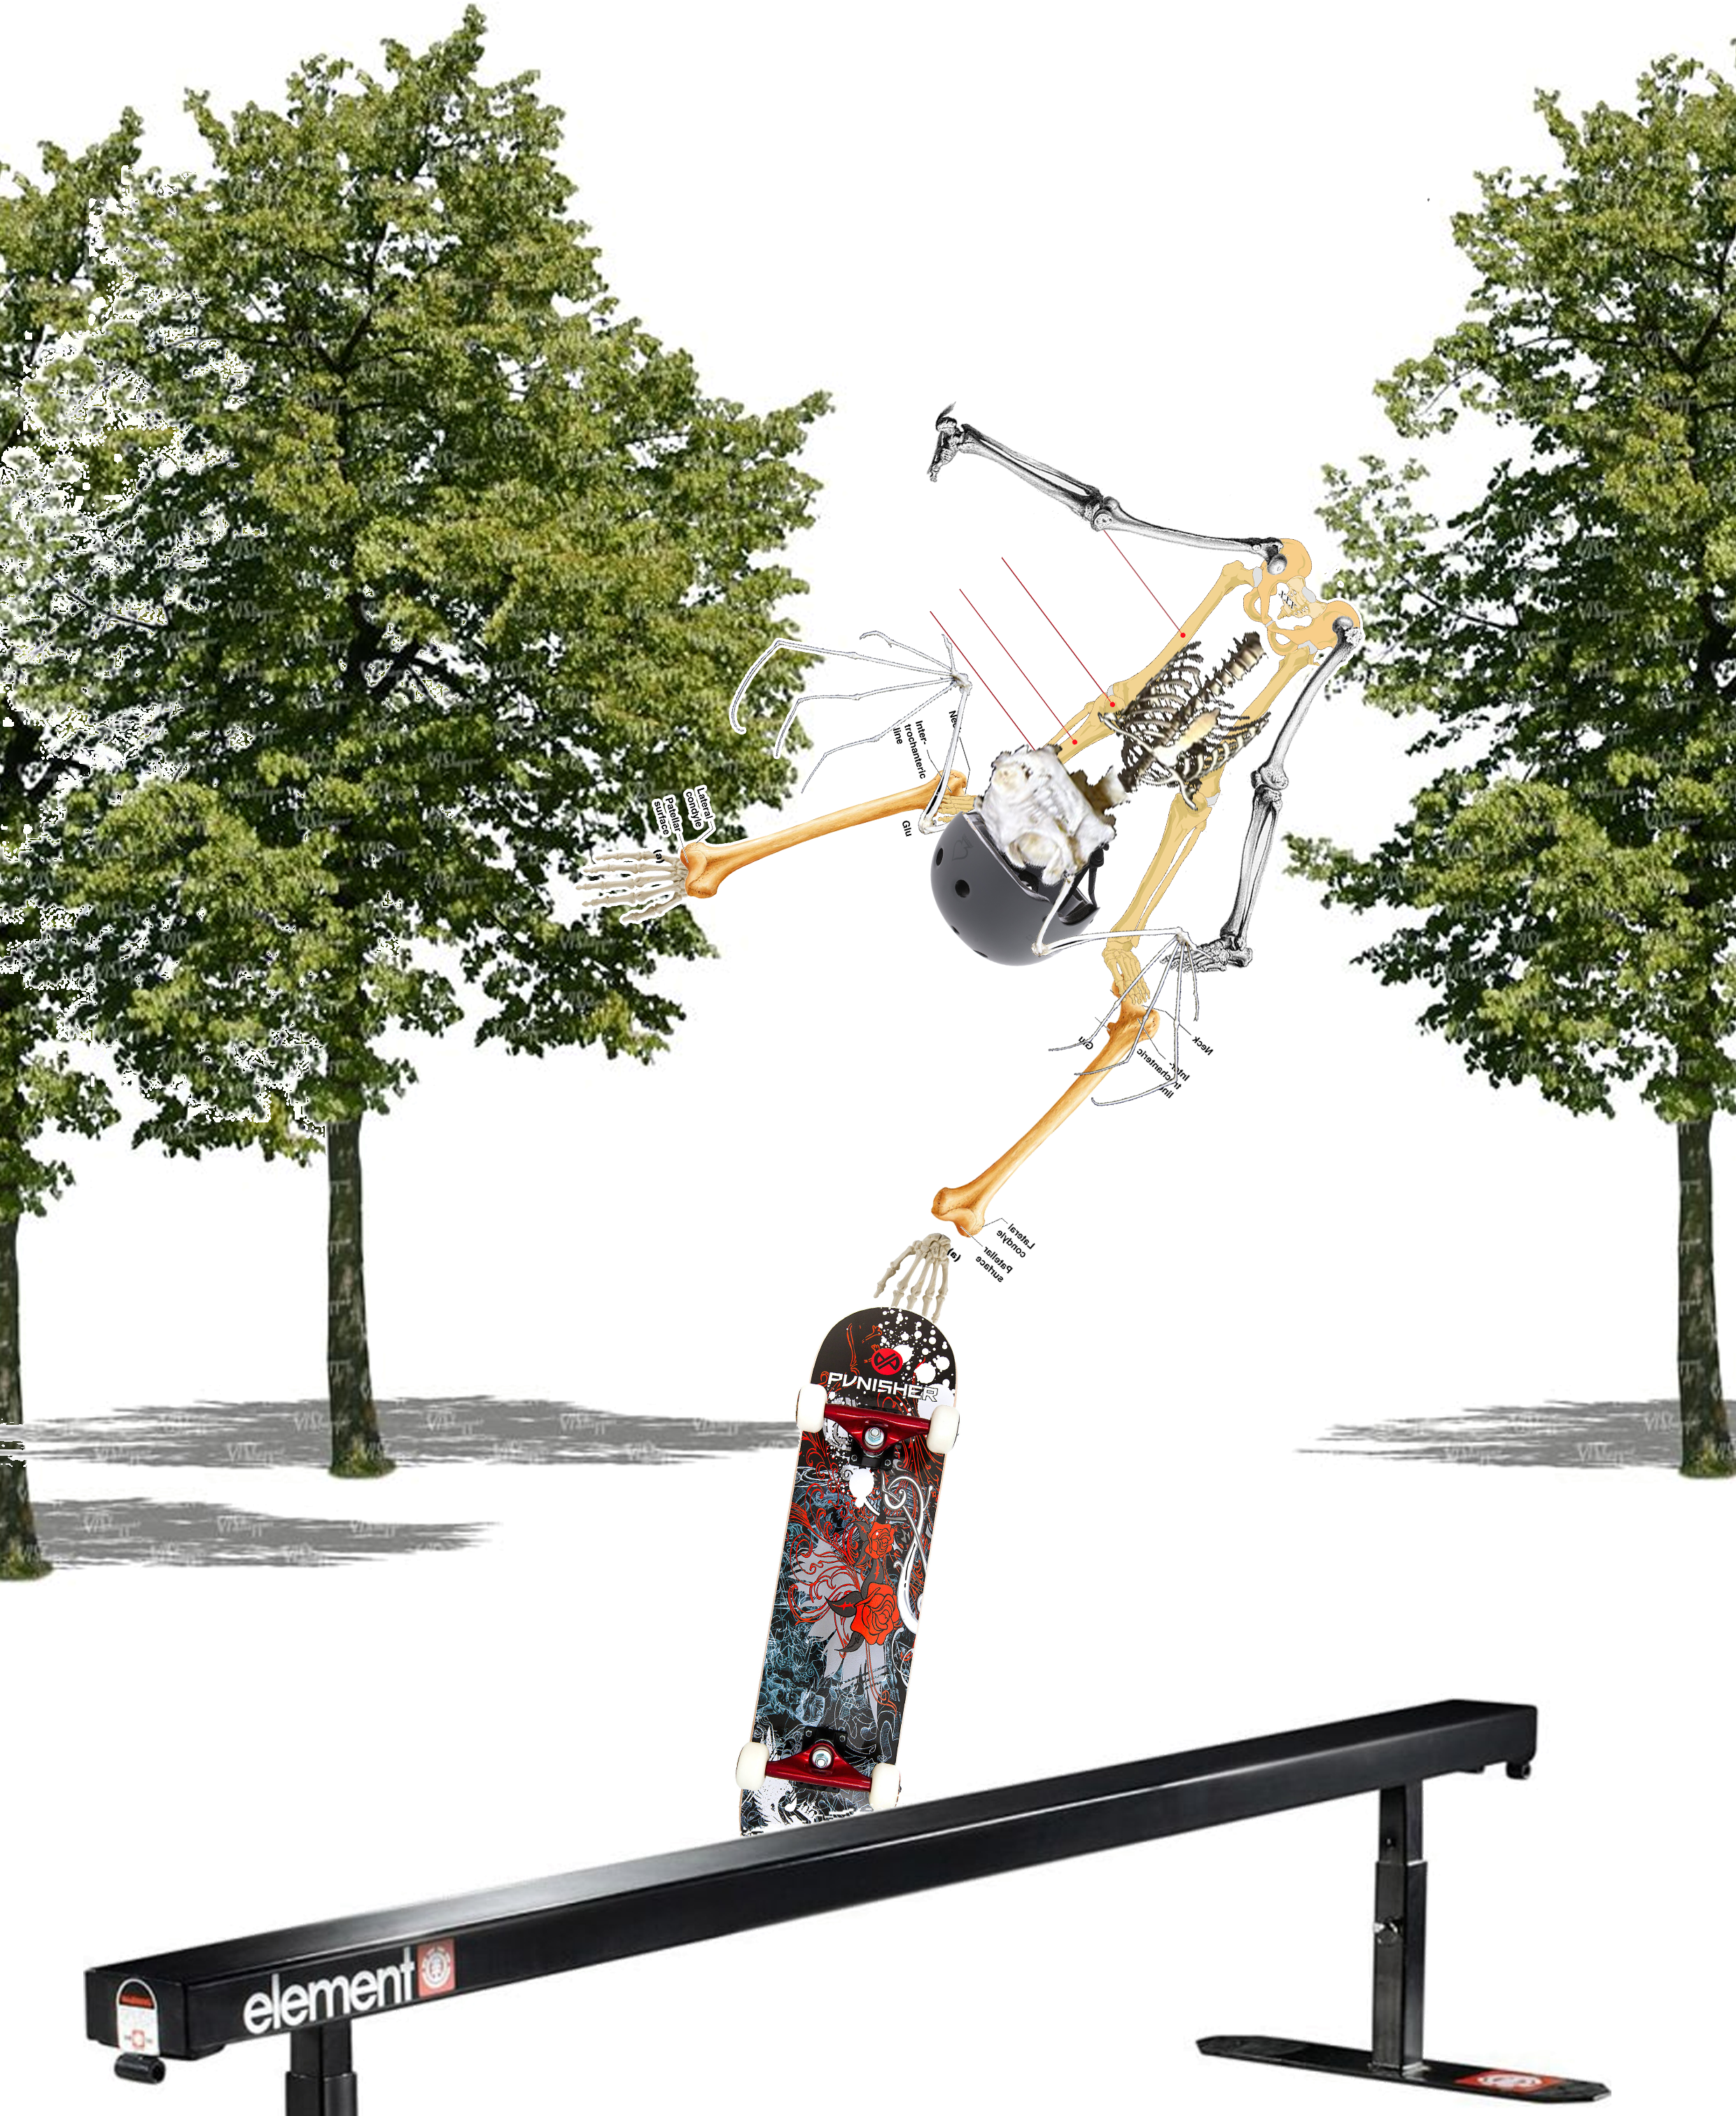 A skeleton made of mismatched parts does a sweet flip on a skateboard grind rail